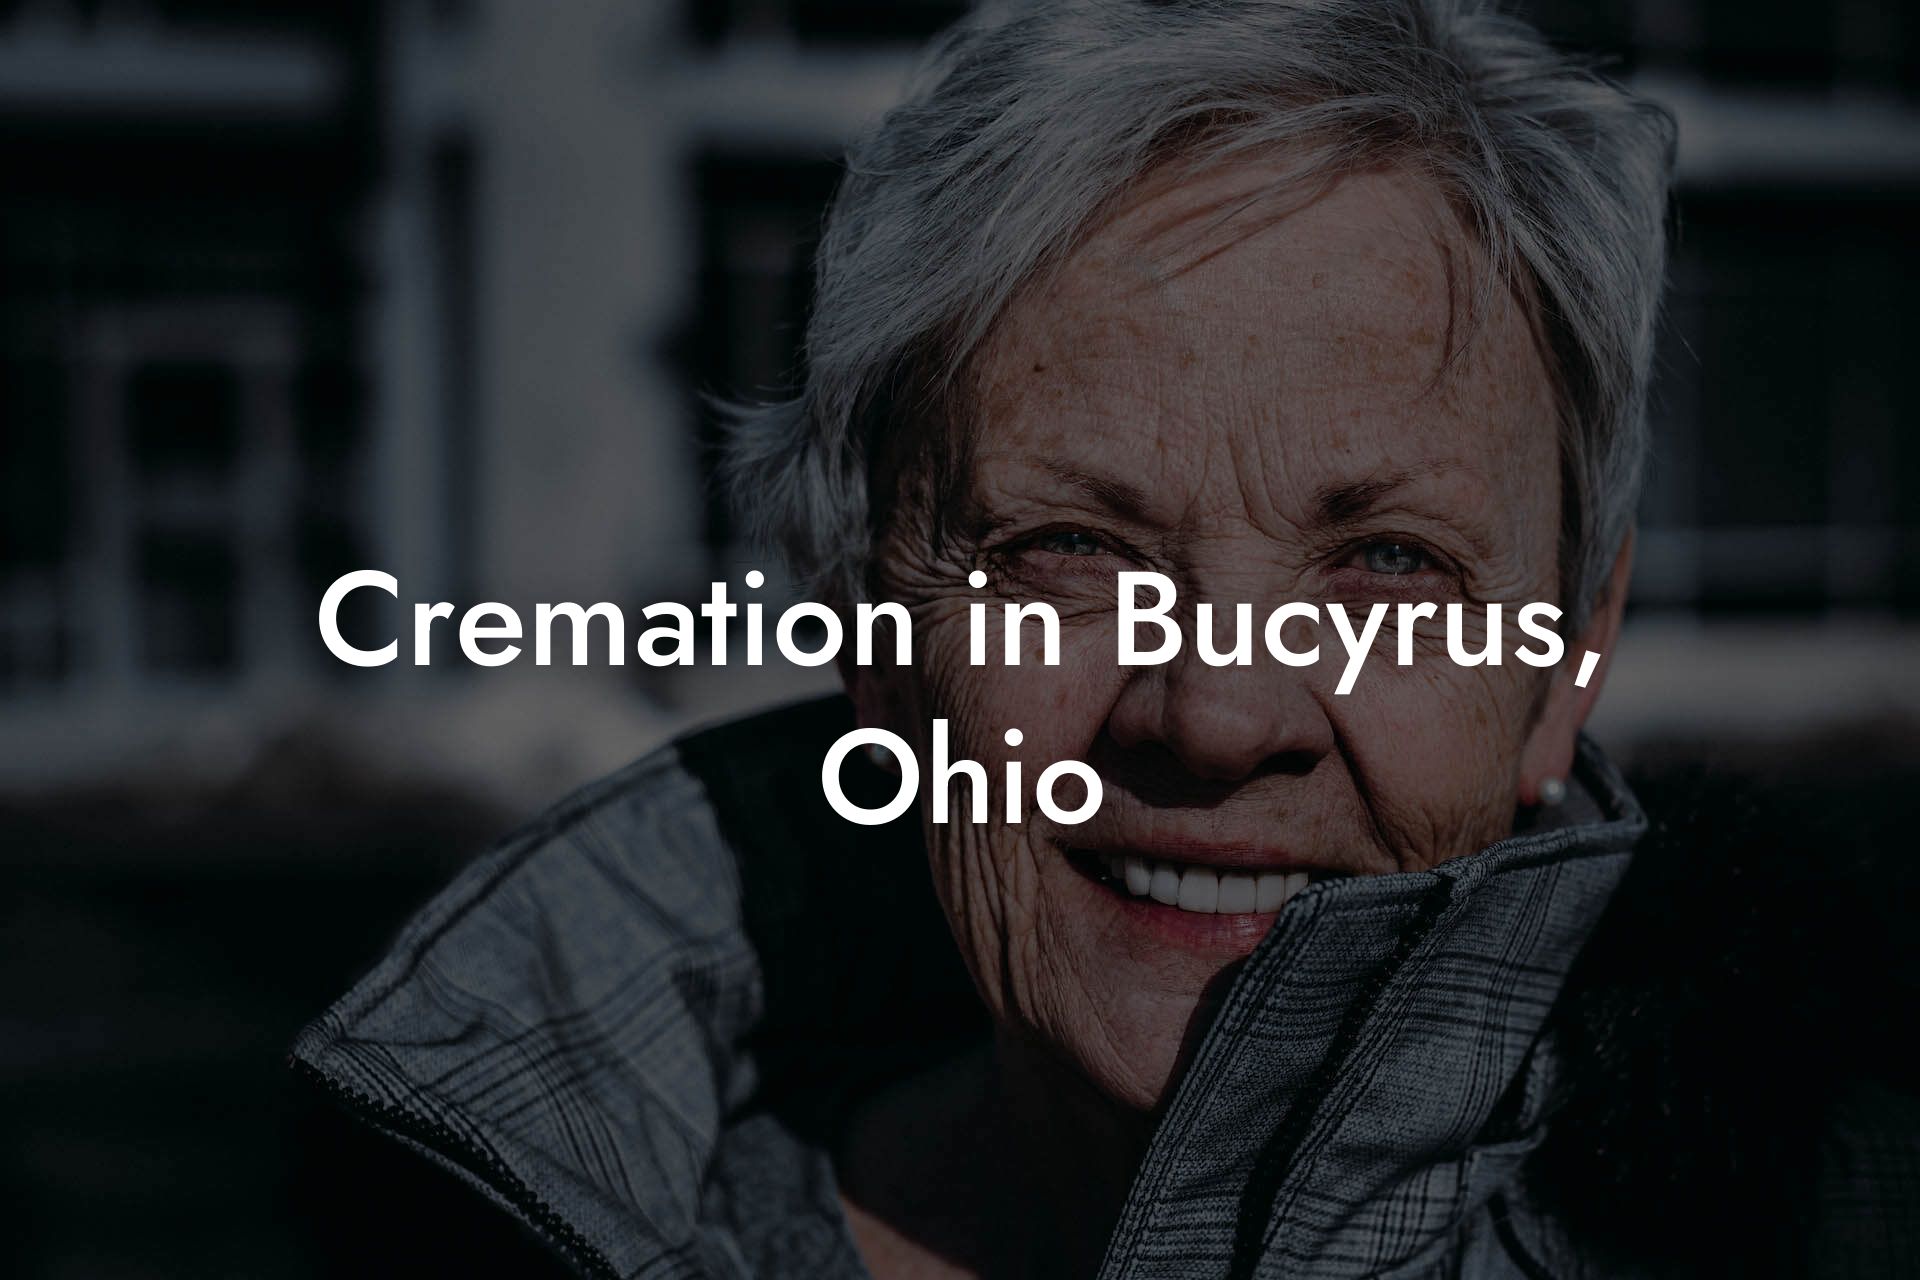 Cremation in Bucyrus, Ohio